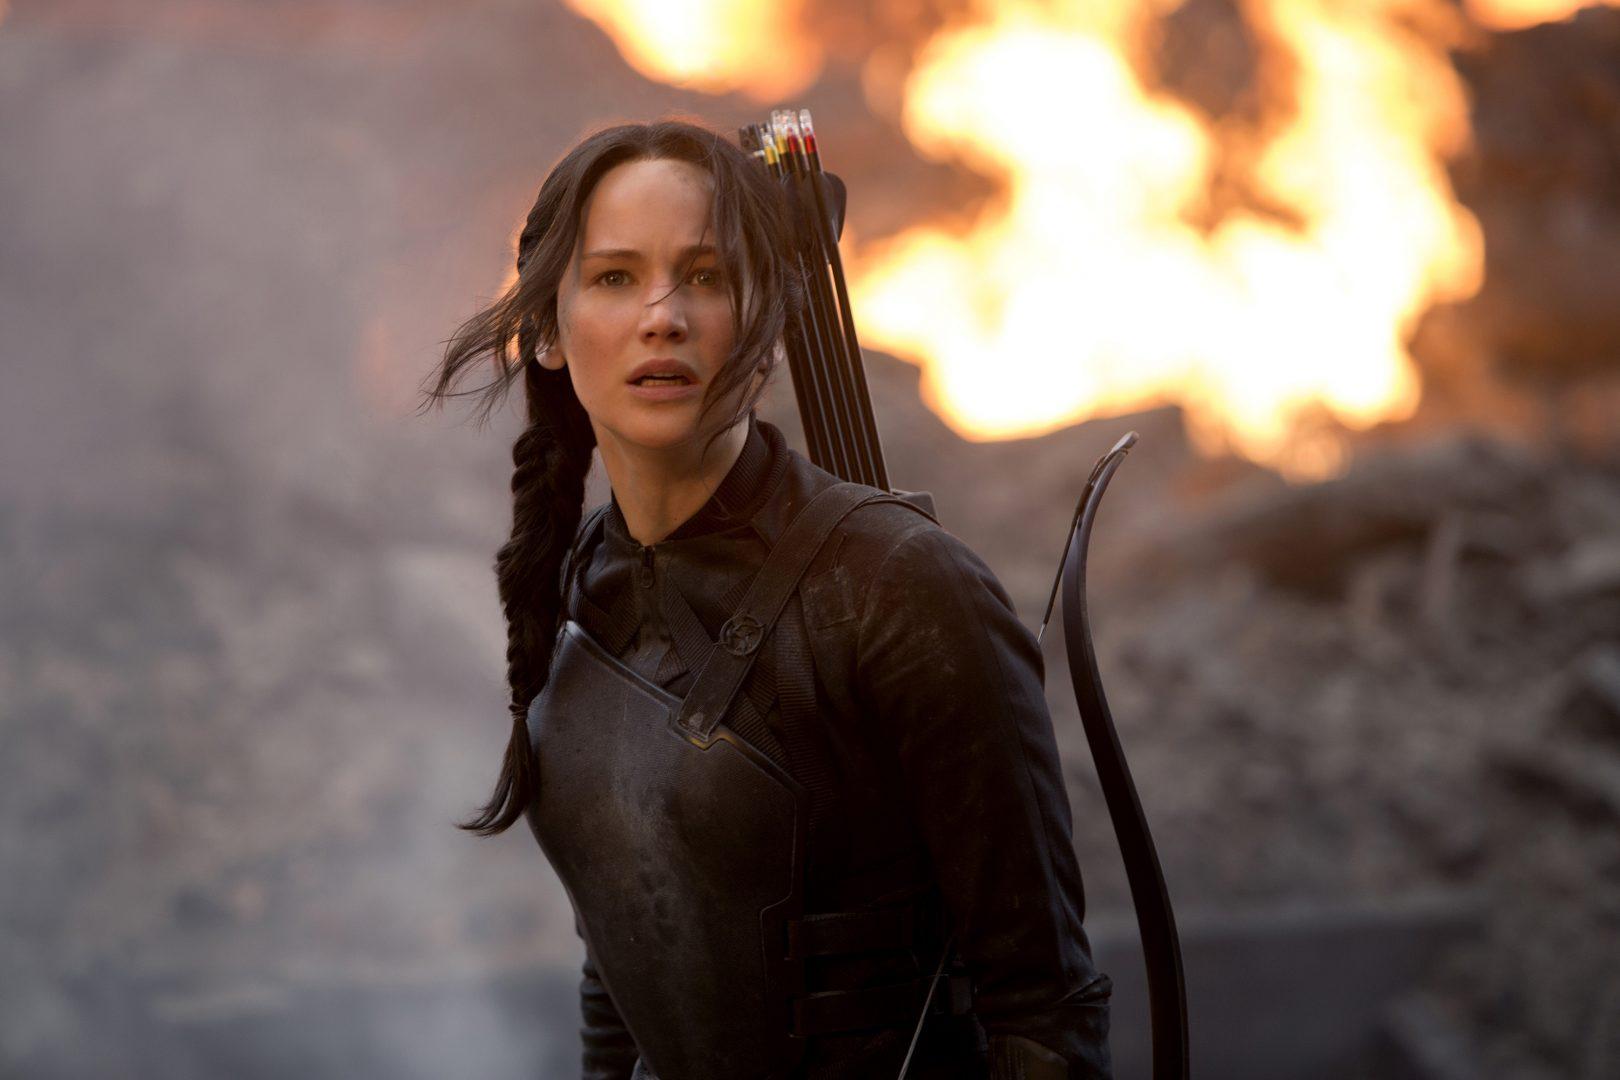 Murray Close/Lionsgate/TNS
Jennifer Lawrence stars as Katniss Everdeen in “The Hunger Games: Mockingjay Part 1.”